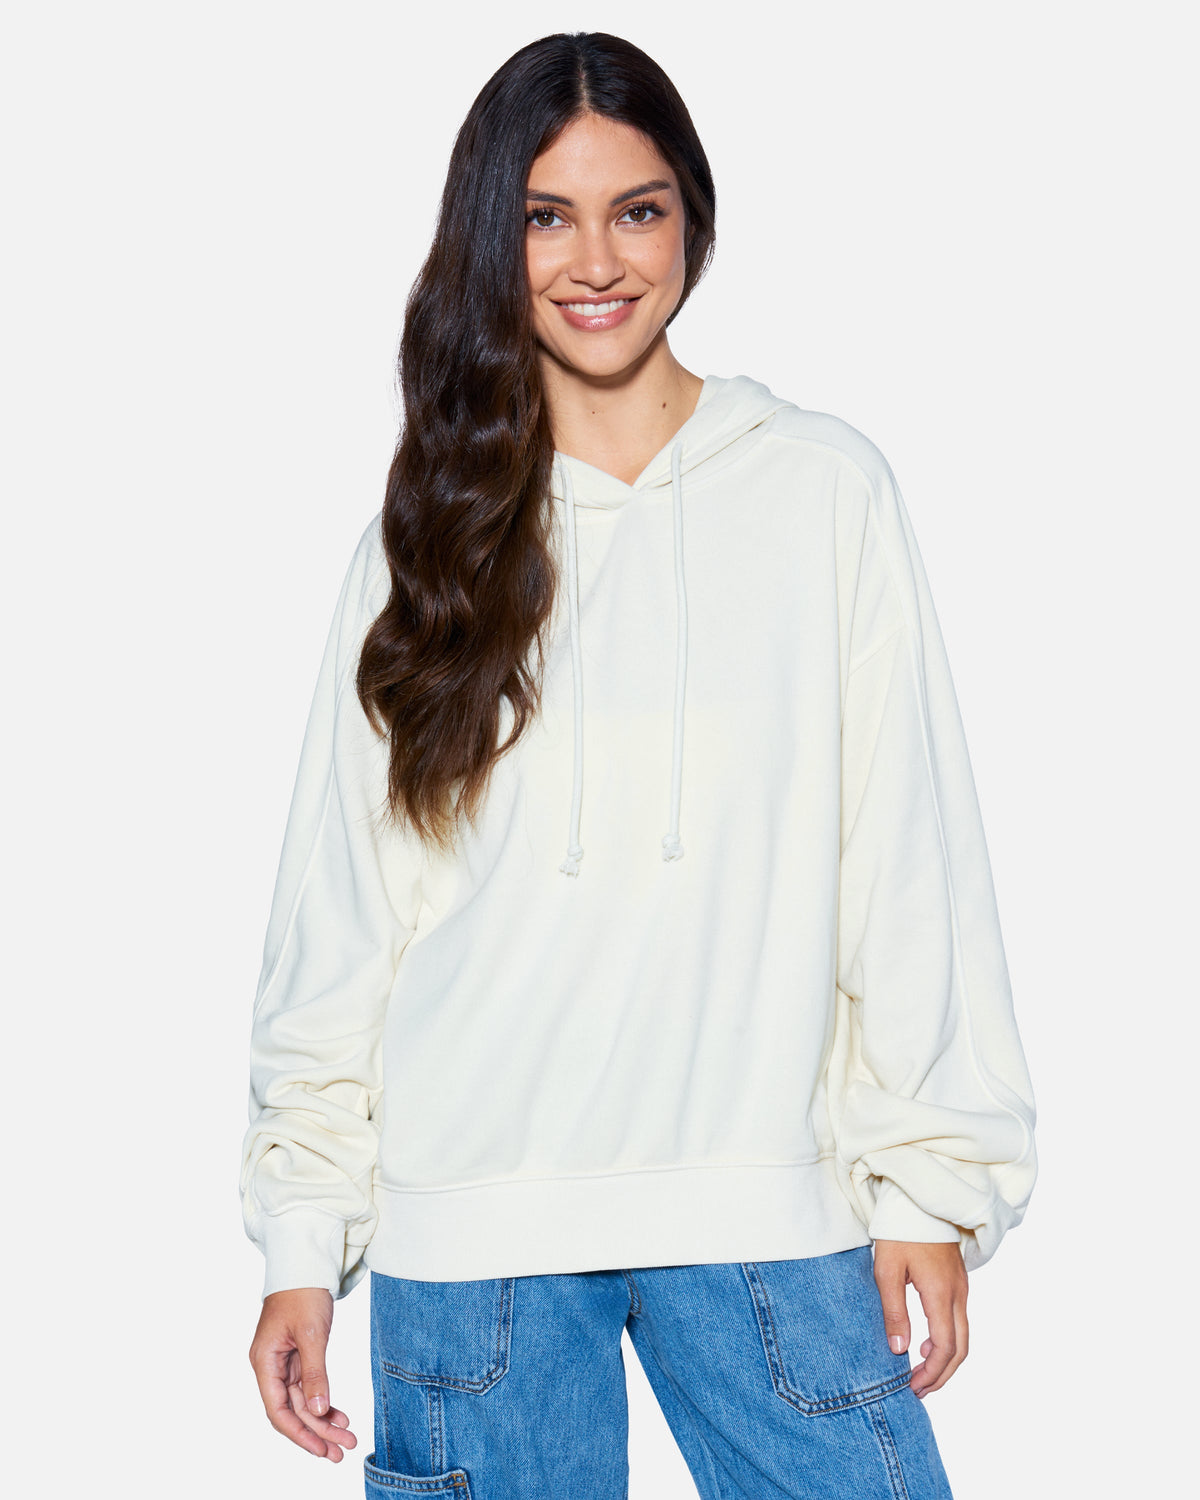 Women's Hoodies, Sweatshirts & Pullovers